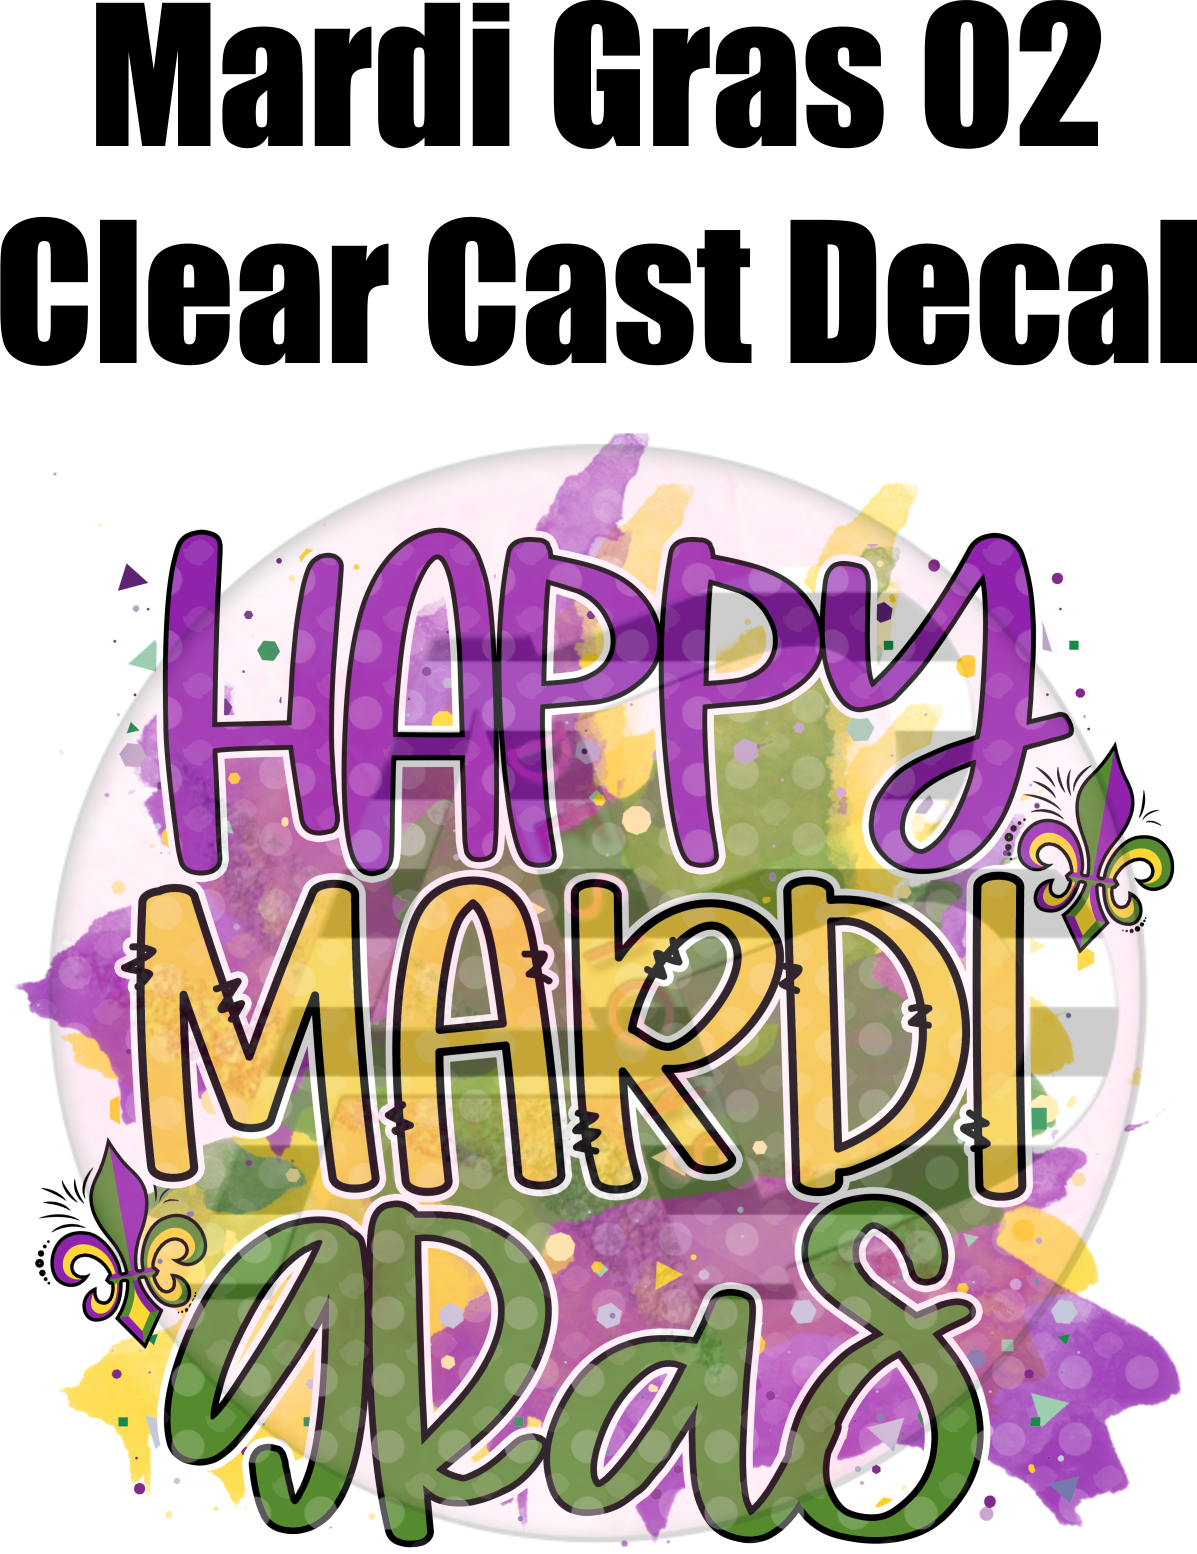 Mardi Gras 02 - Clear Cast Decal